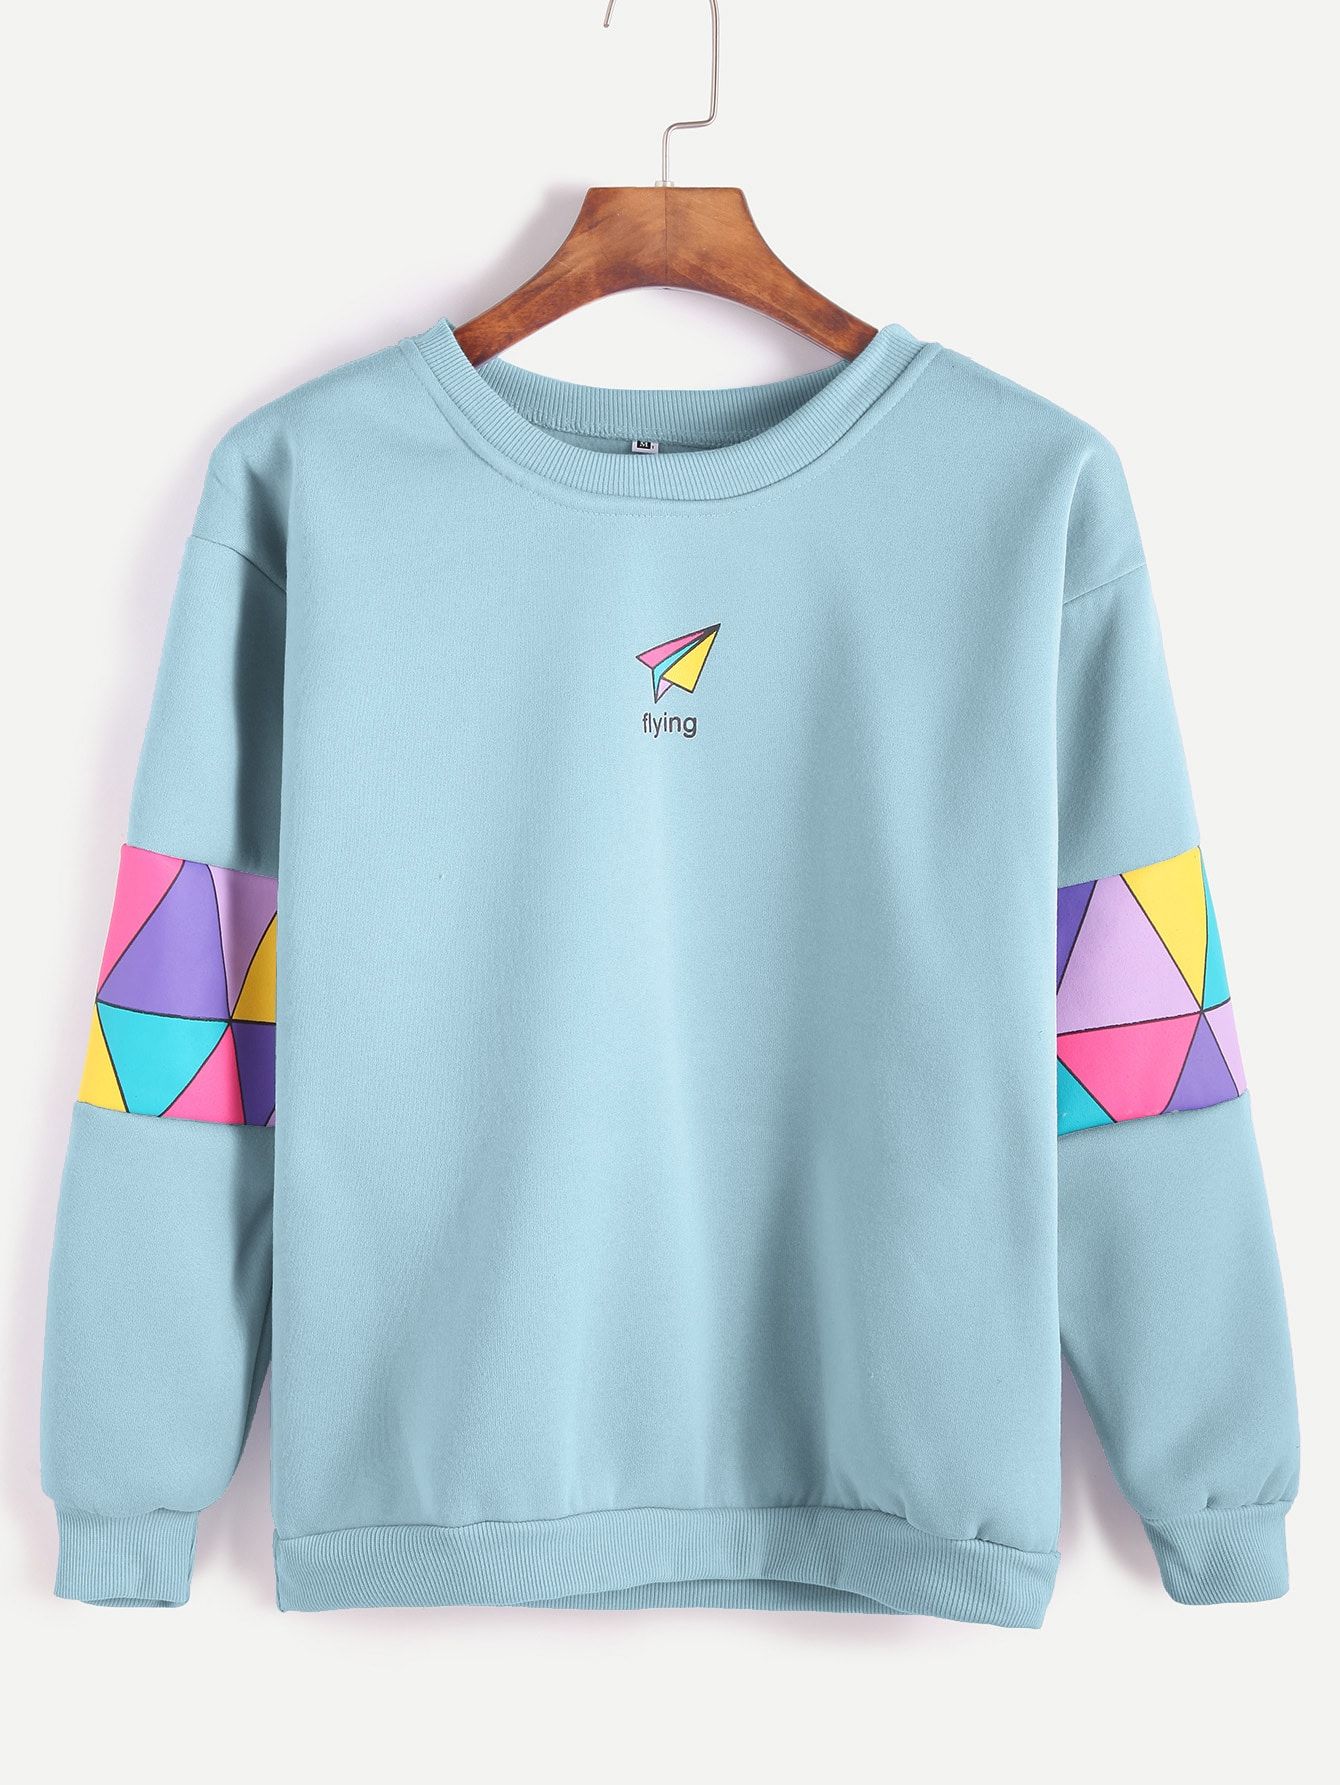 Create Your Own Stylish Contrasting Raglan Sweatshirt with This DIY Tutorial